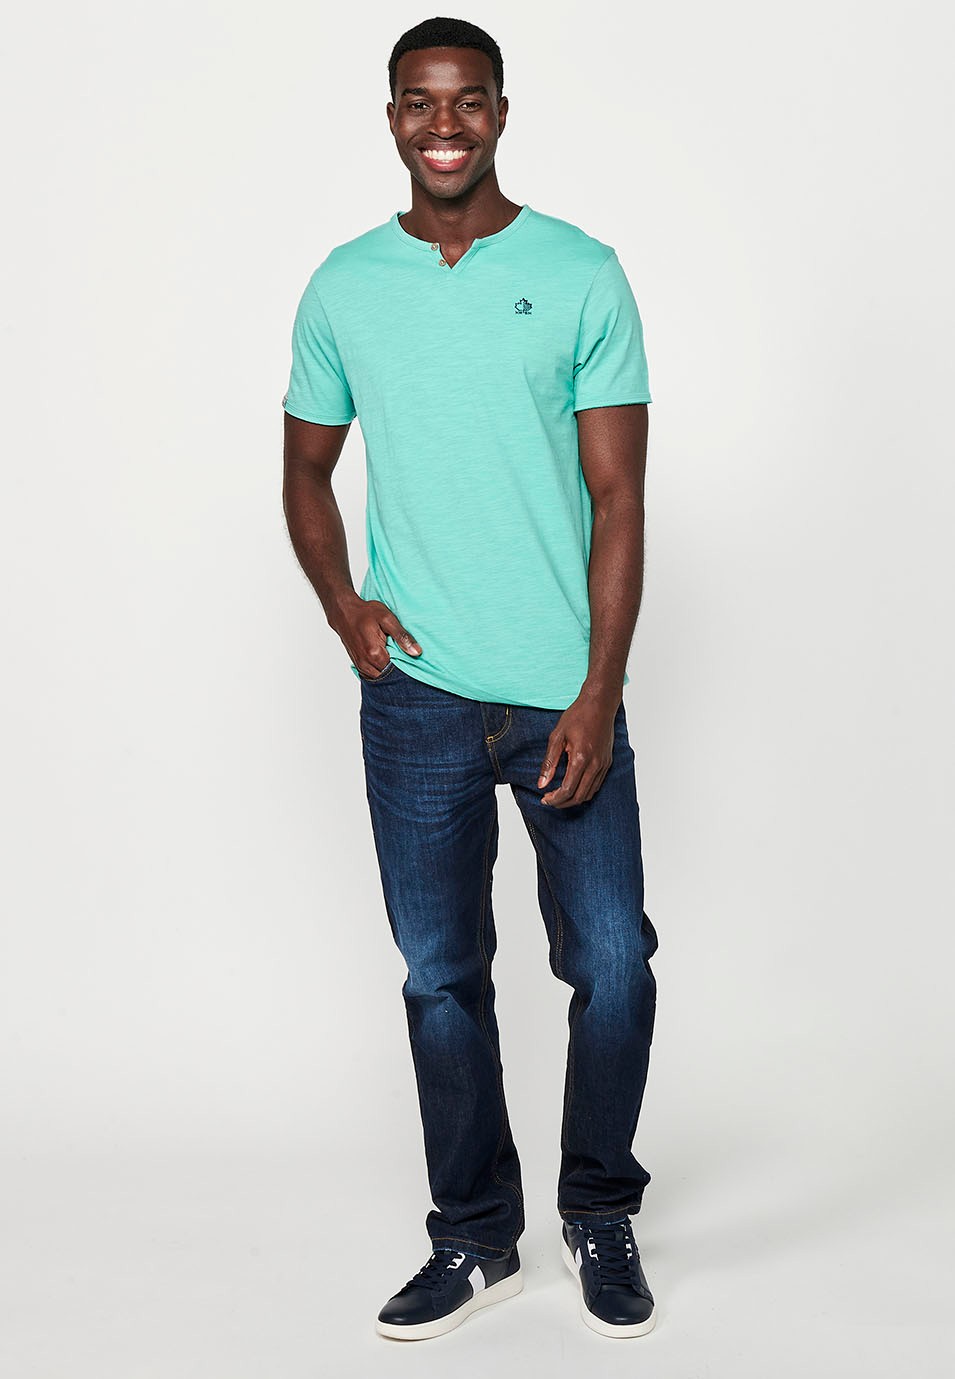 Camiseta básica de manga corta de algodón, cuello V con boton, color menta para hombre 4